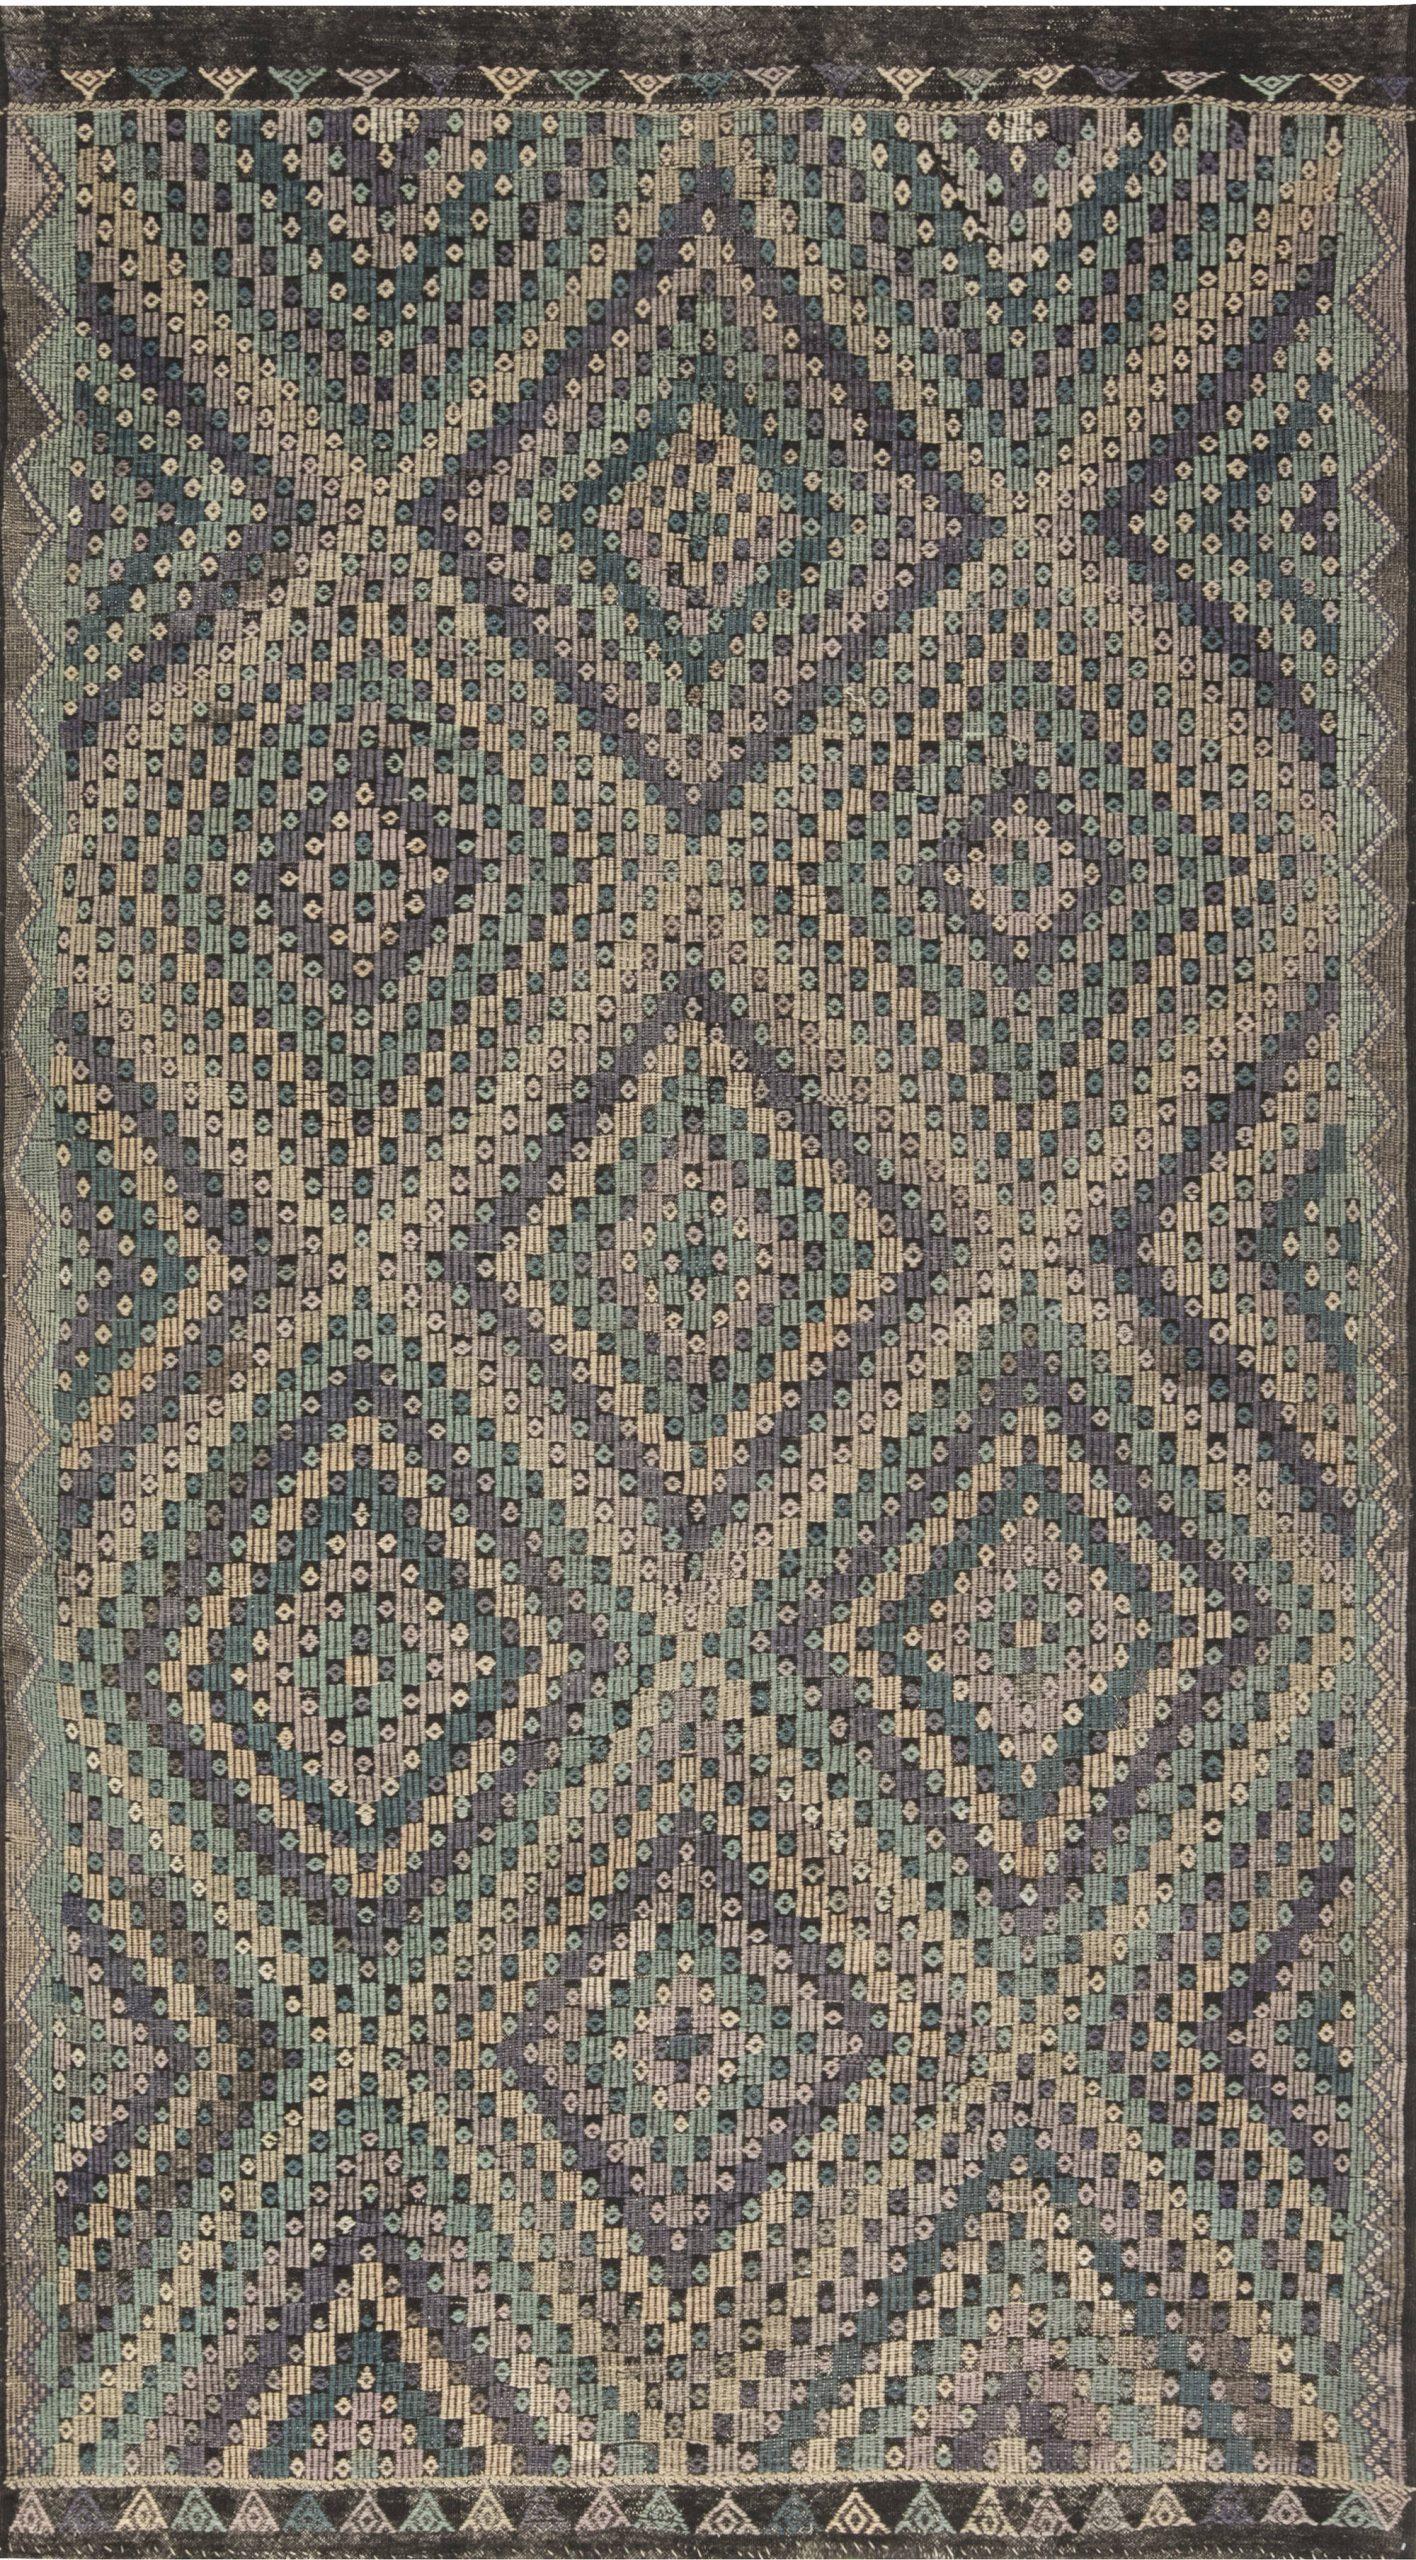 Mid-20th century Moroccan handmade Kilim rug
Size: 6'5